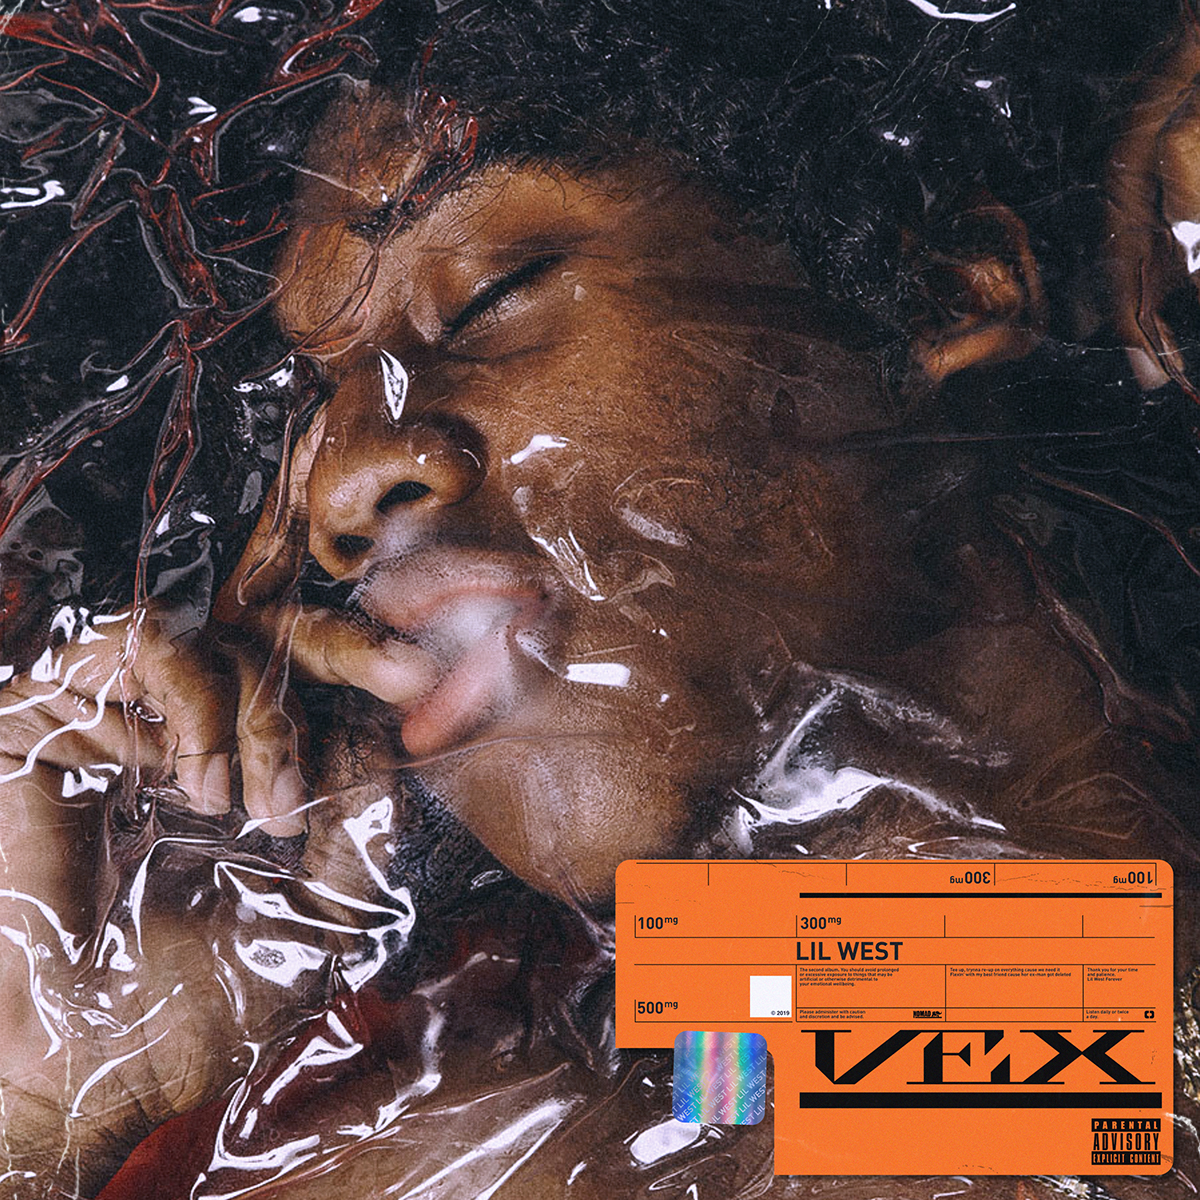 Lil West "Vex" Album Artwork